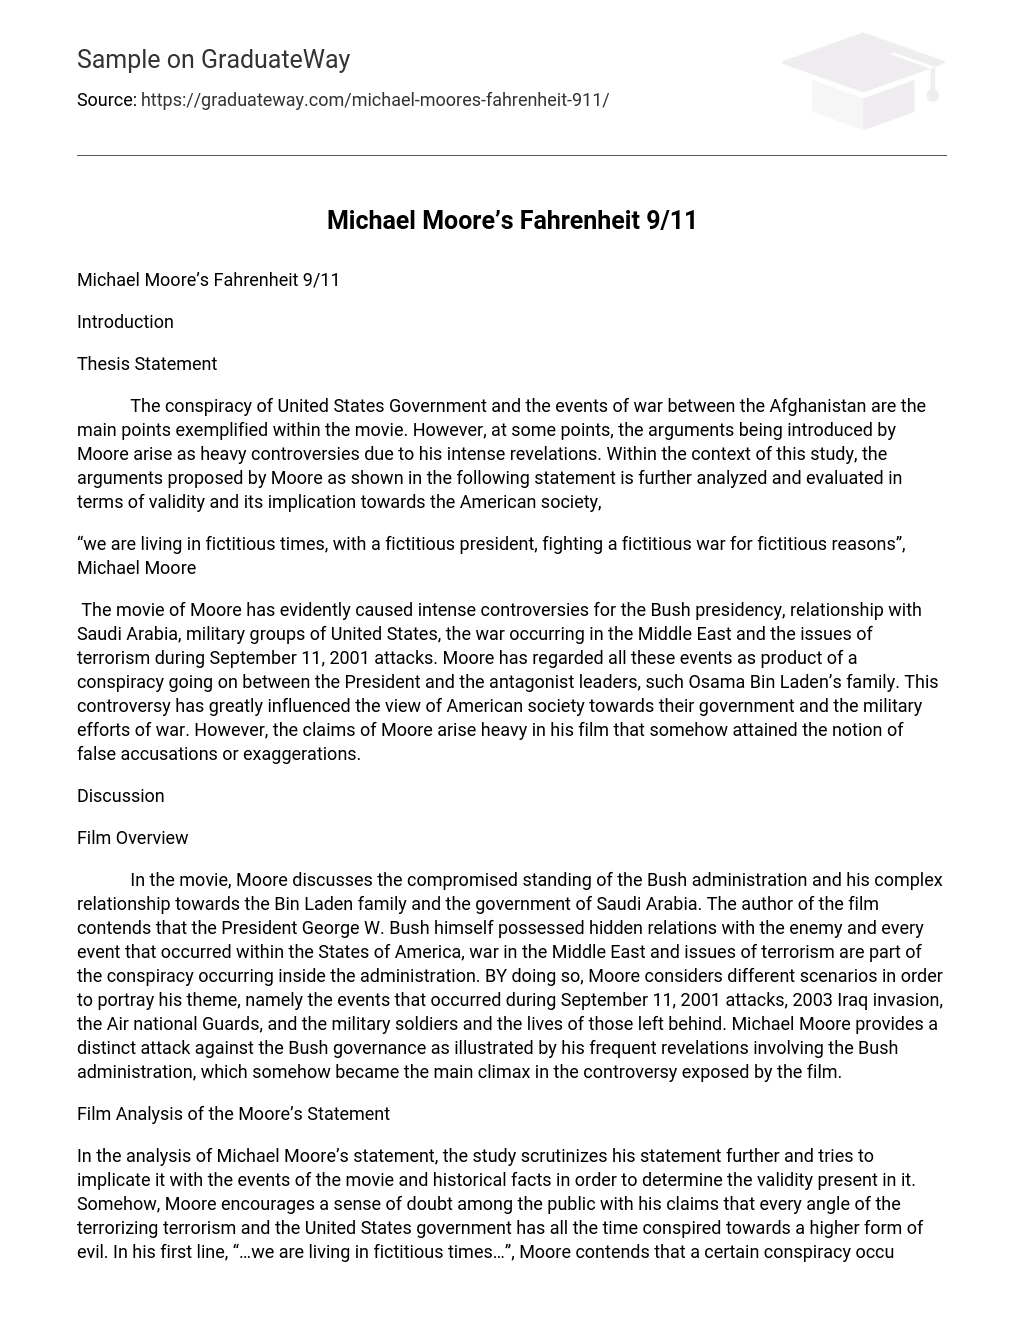 Michael Moore’s Fahrenheit 9/11 Analysis